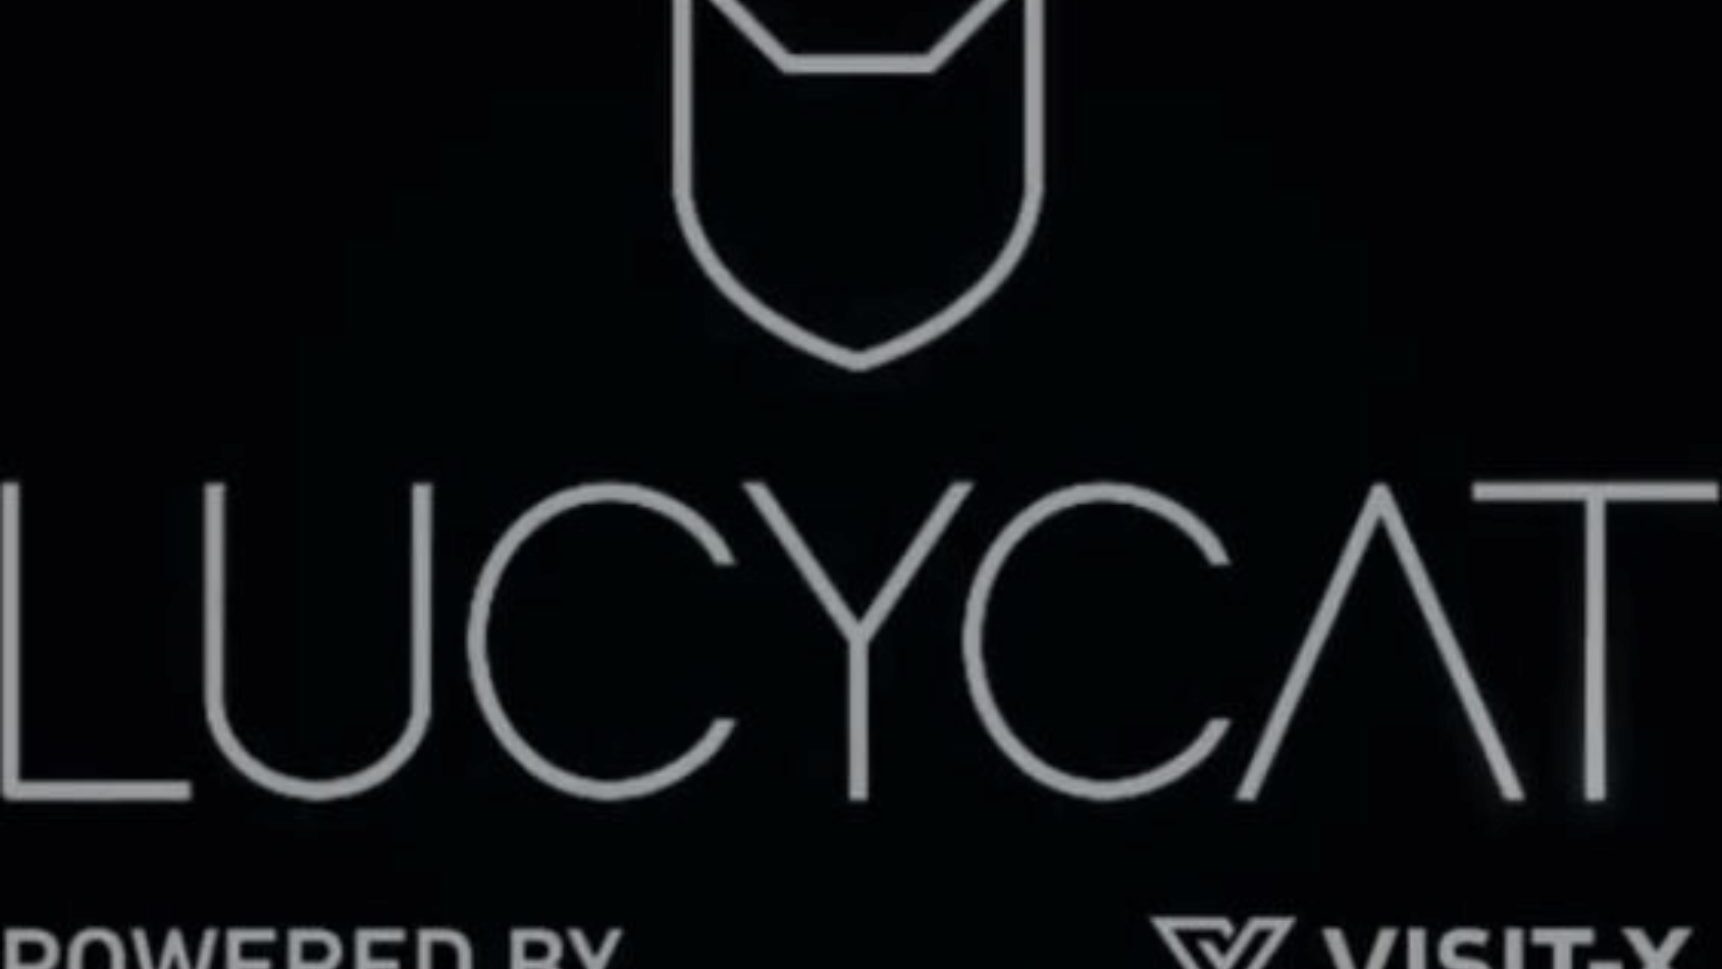 interaktiva wichs utmaning - Lucy Cat